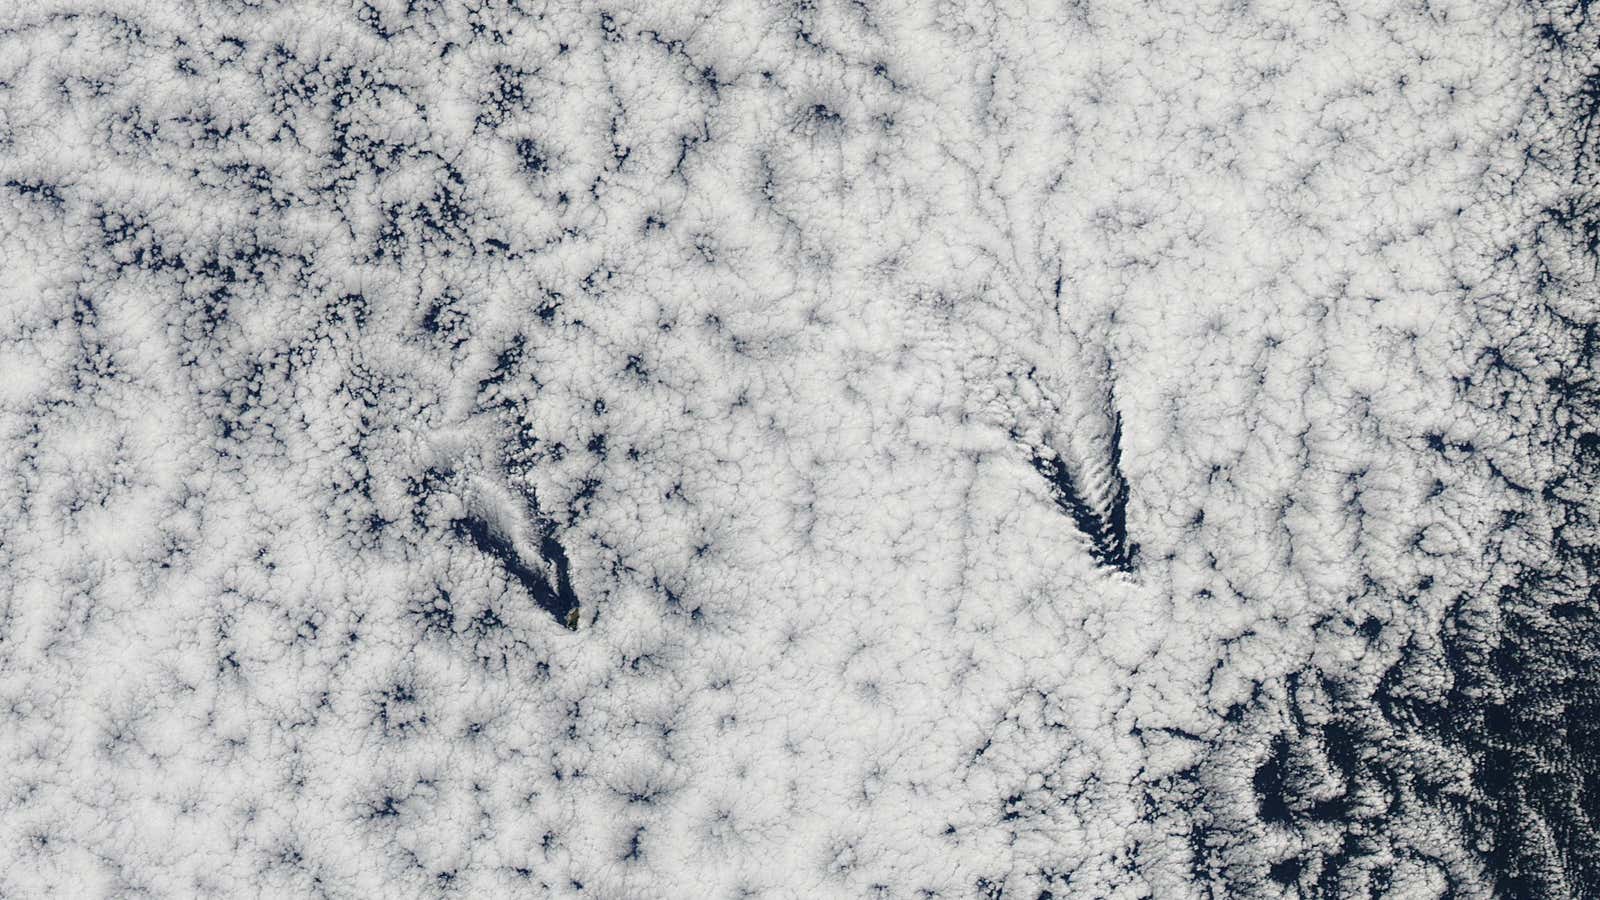 A view of the Juan Fernandez Islands cutting through the clouds, taken  700 km up.